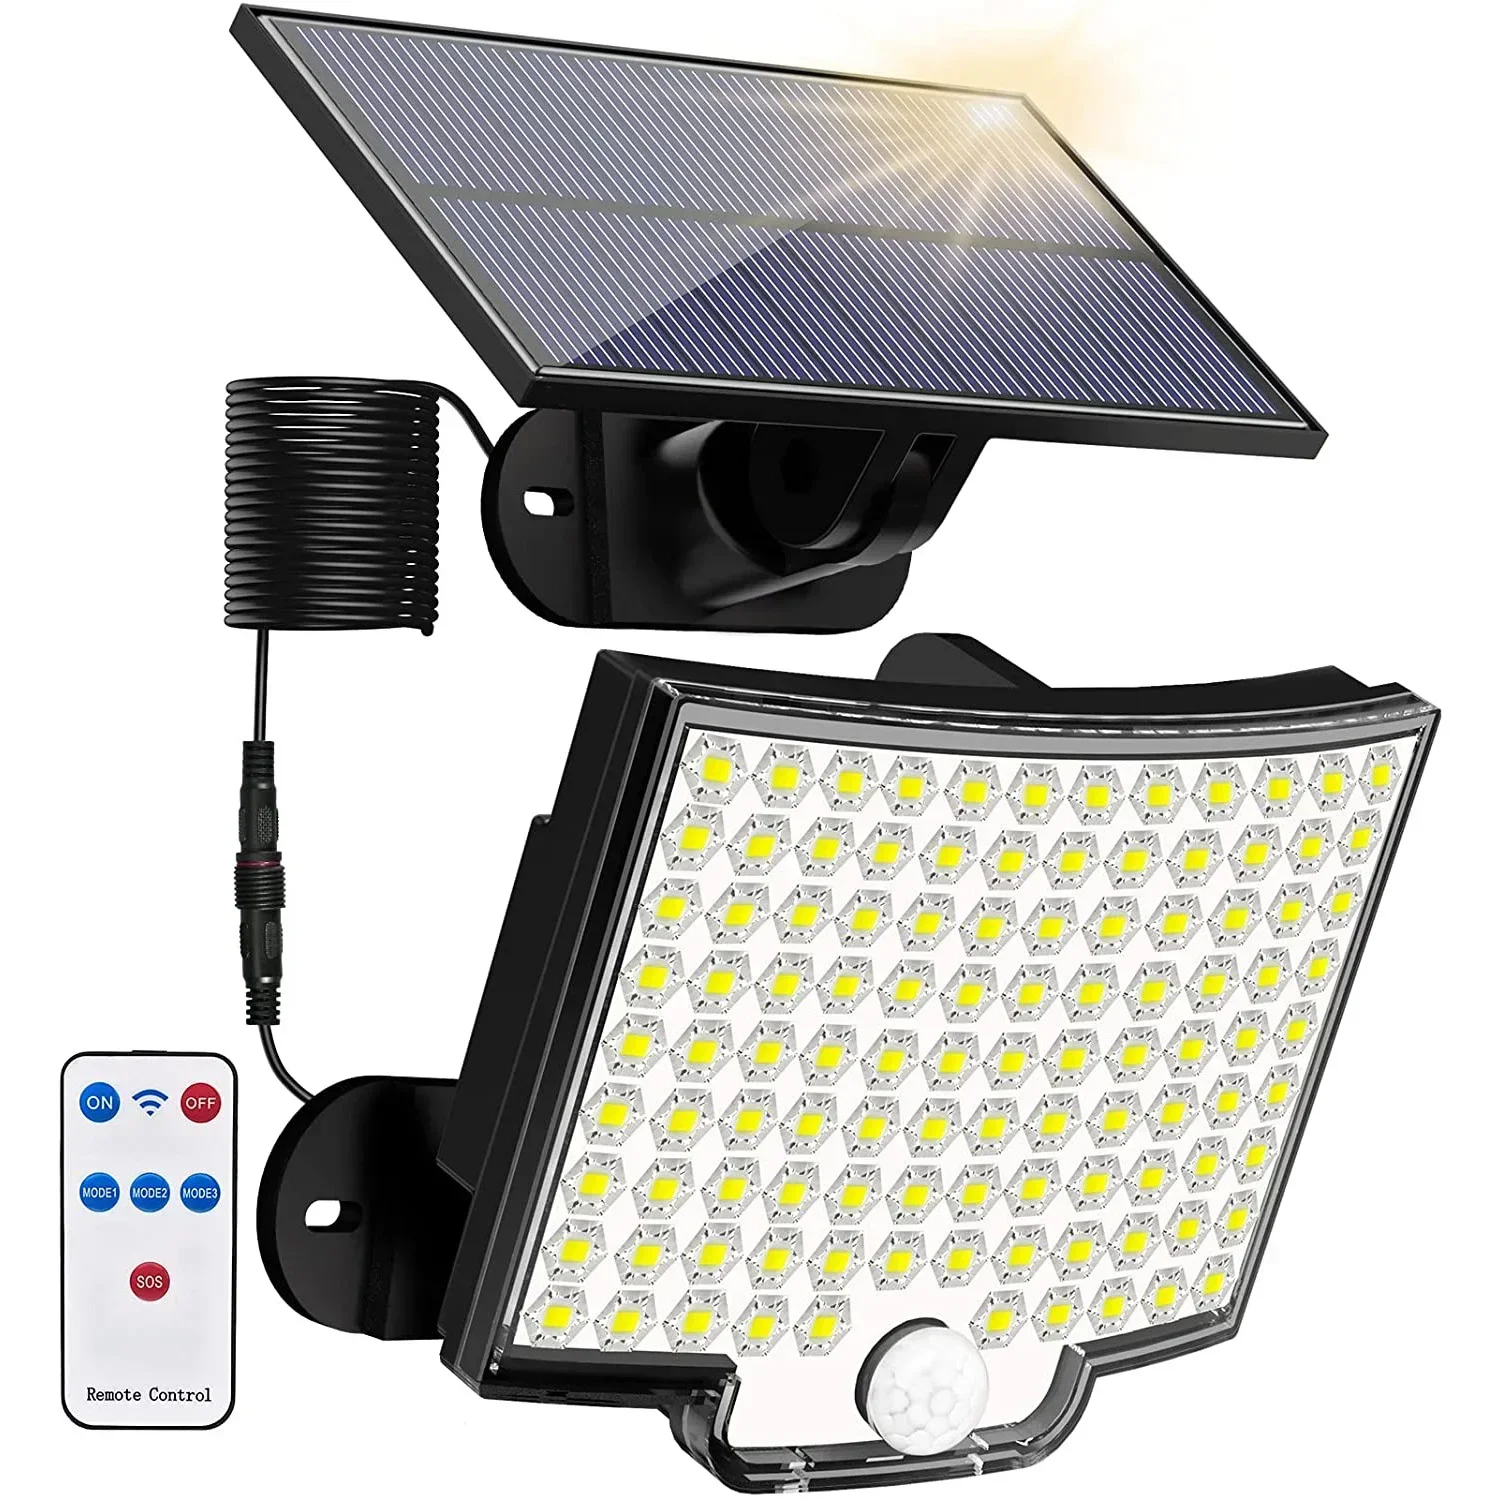 

Solar Light Outdoor LED Wall Lamp Motion Sensor 106 Beads IP65 Waterproof Extra Bright 4 Working Modes Powerful Garden lighting